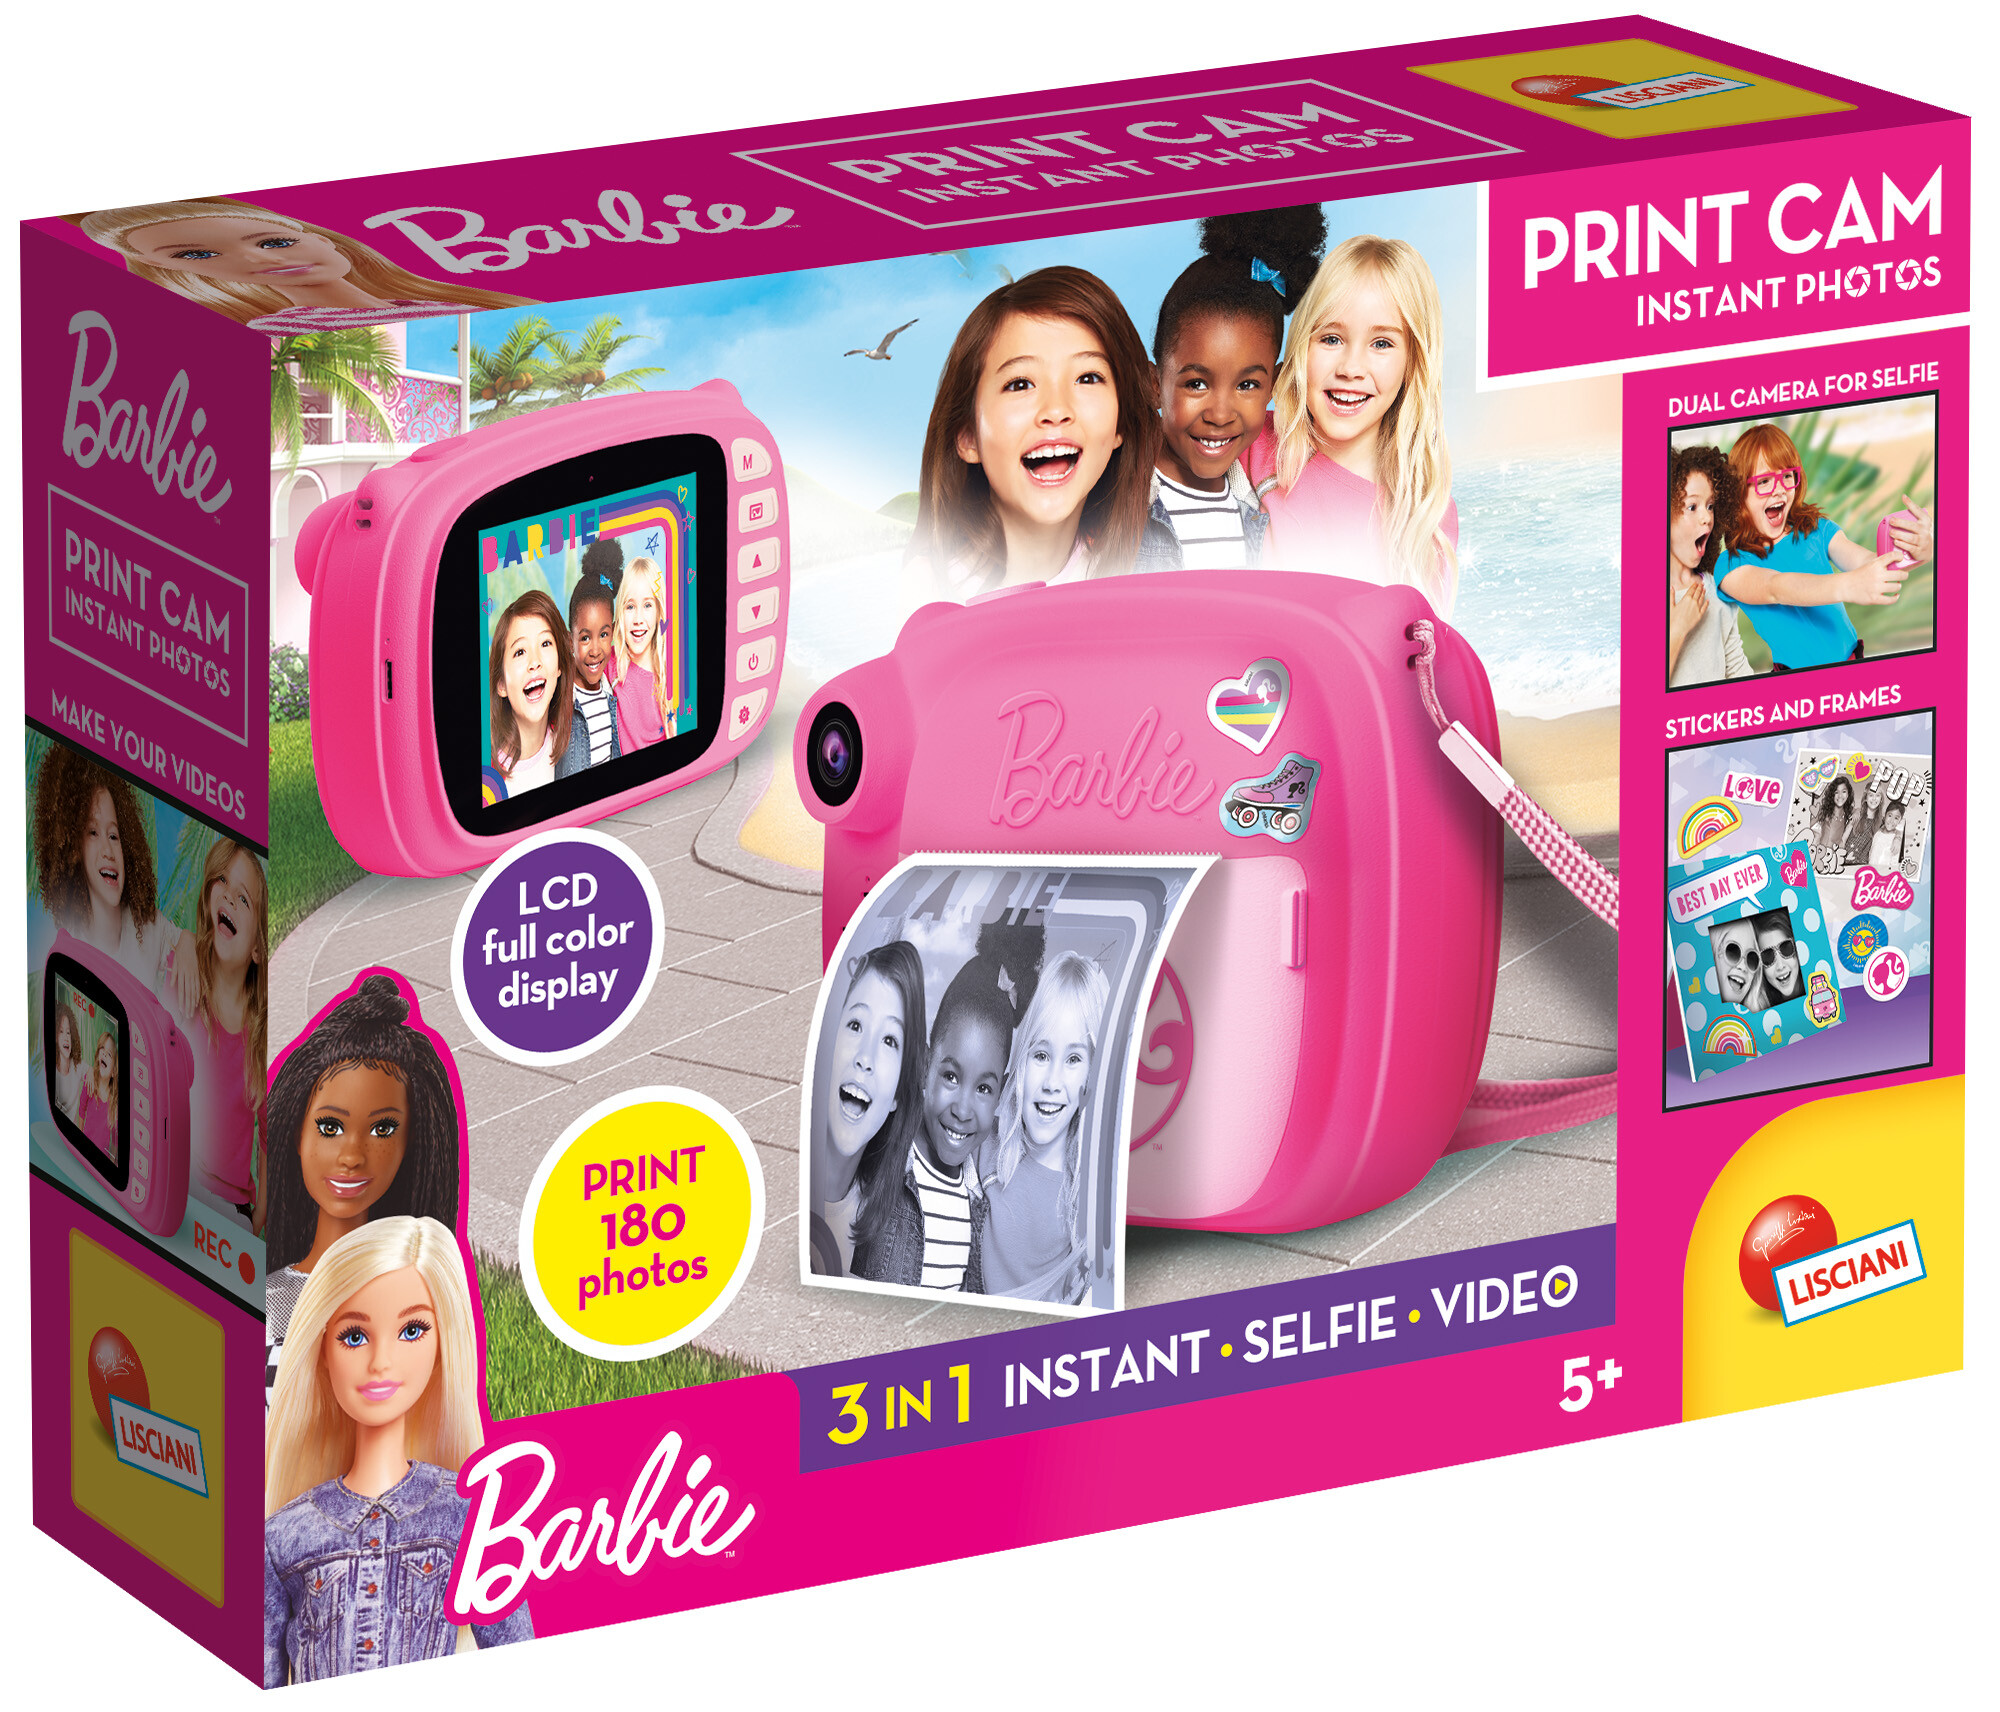 Barbie print cam - LISCIANI, Barbie